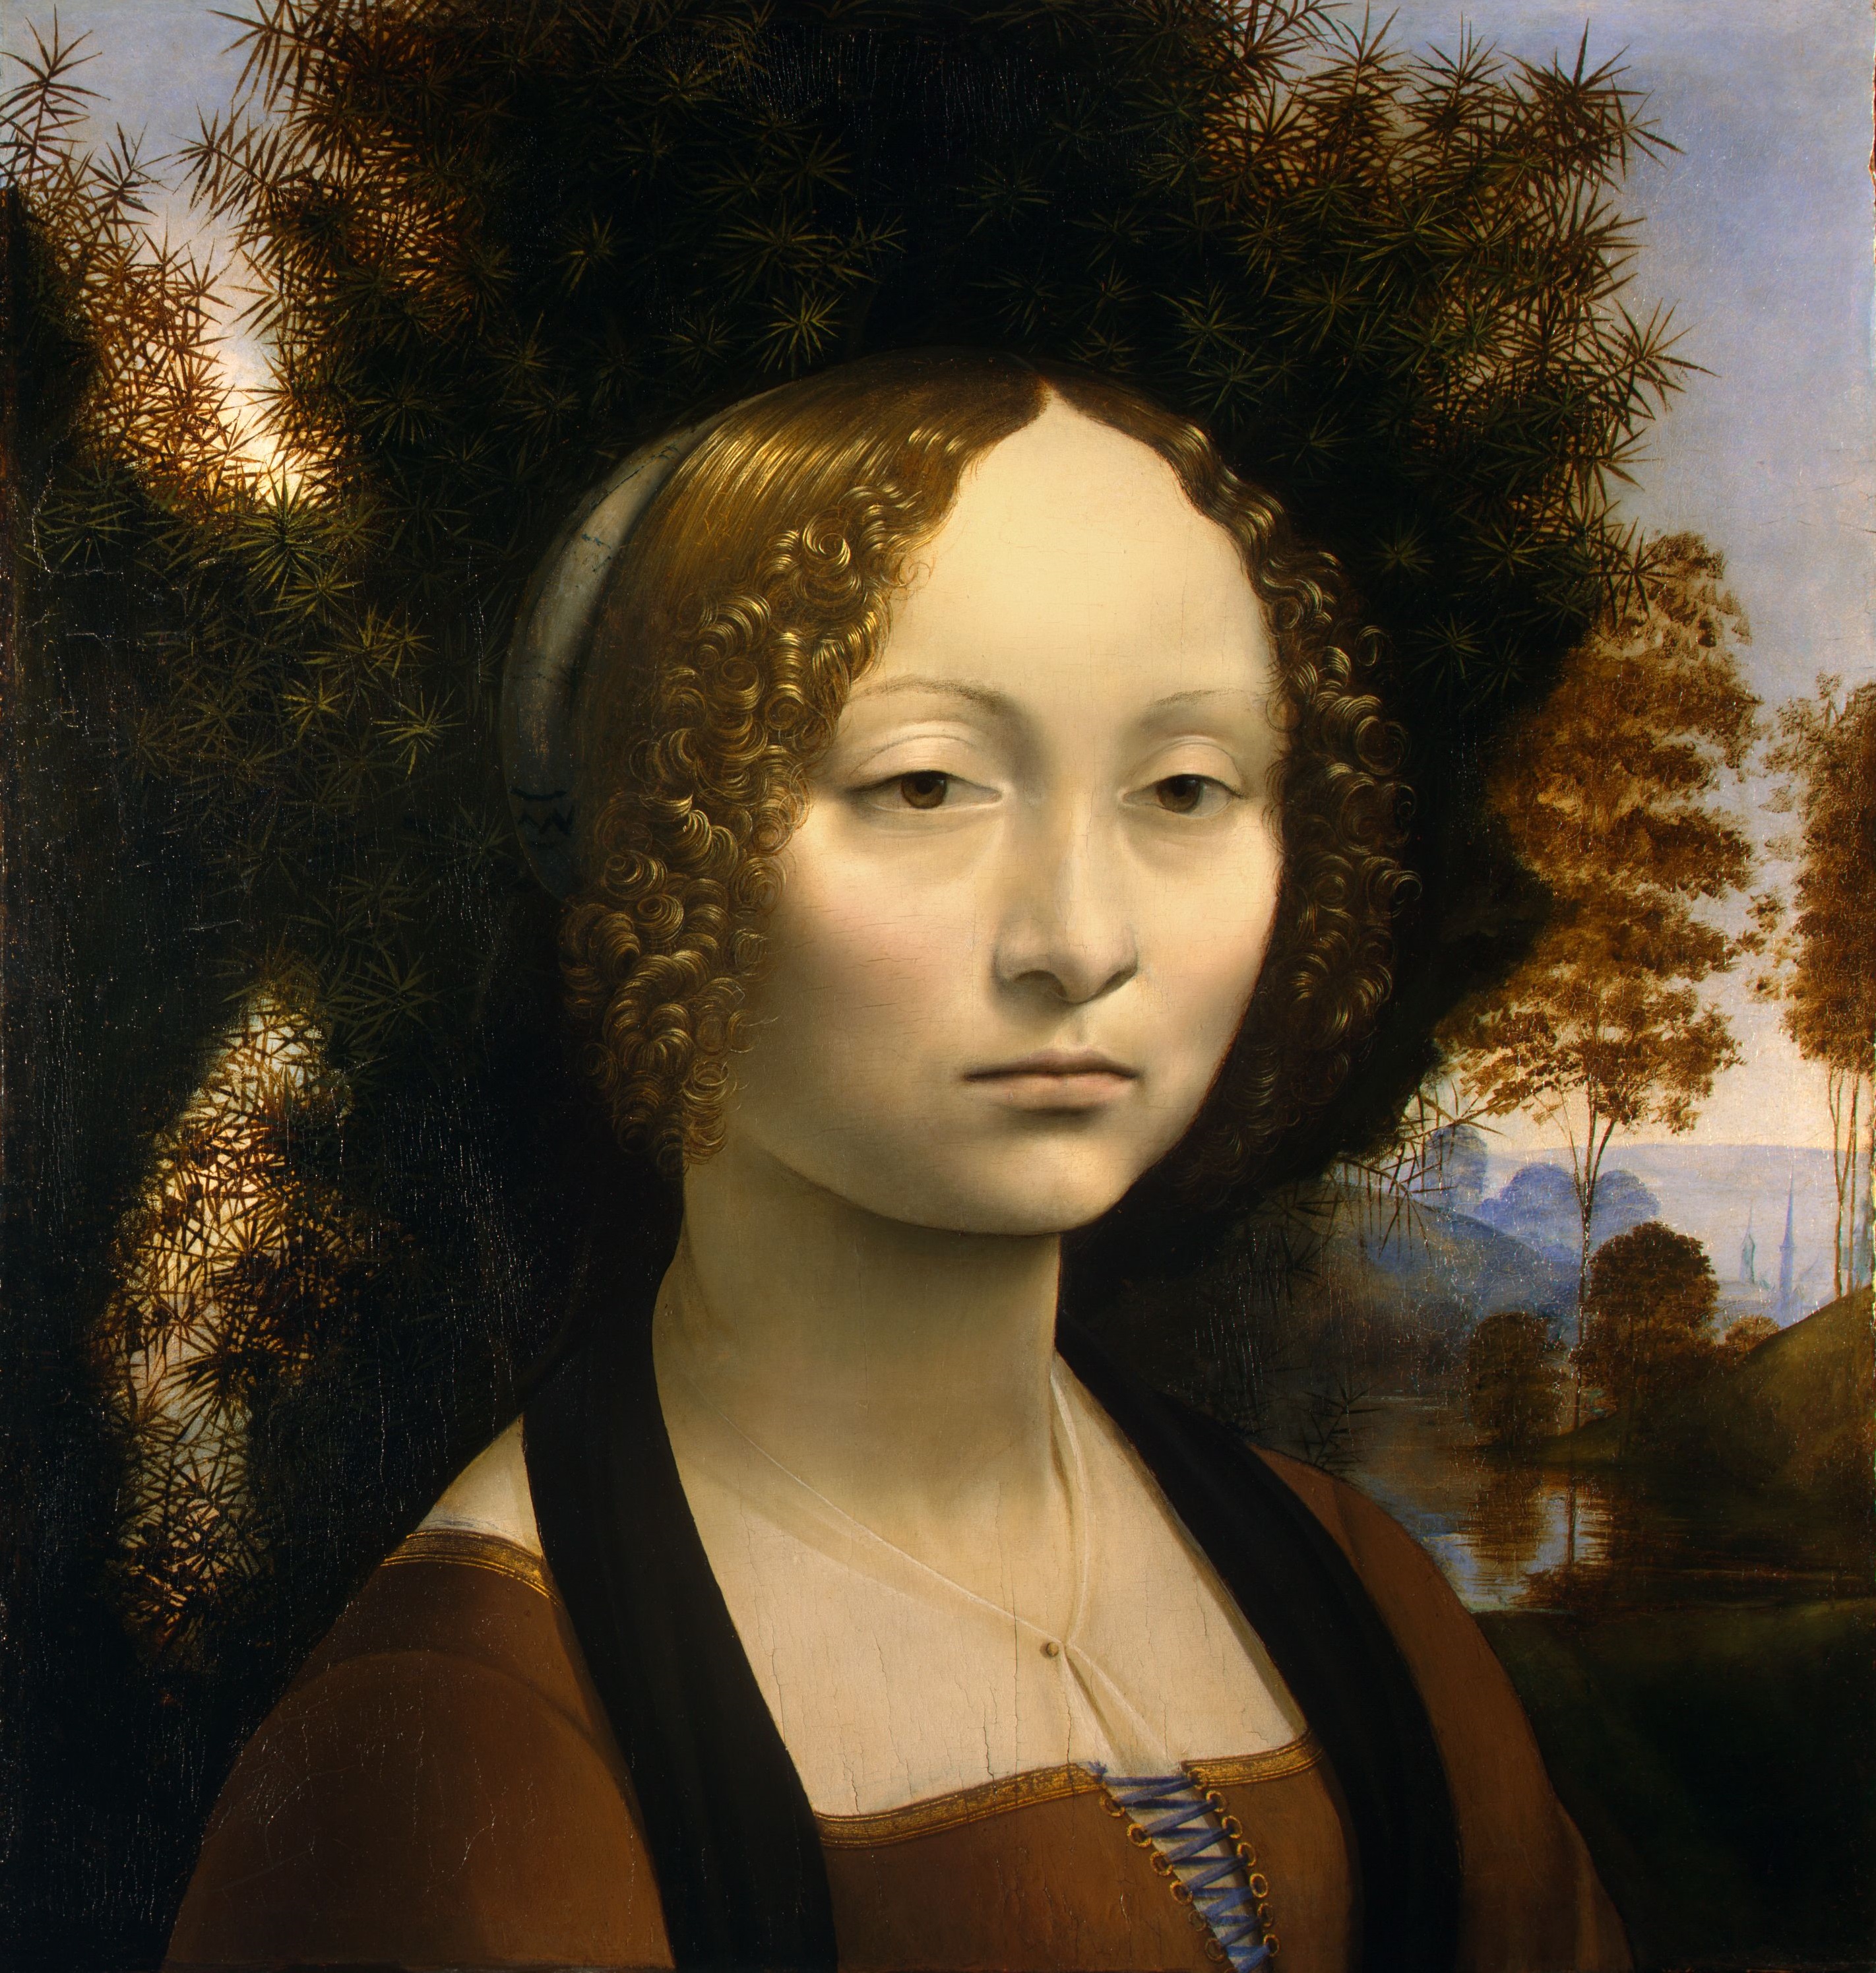 Ginevra de Benci by Leonardo da Vinci